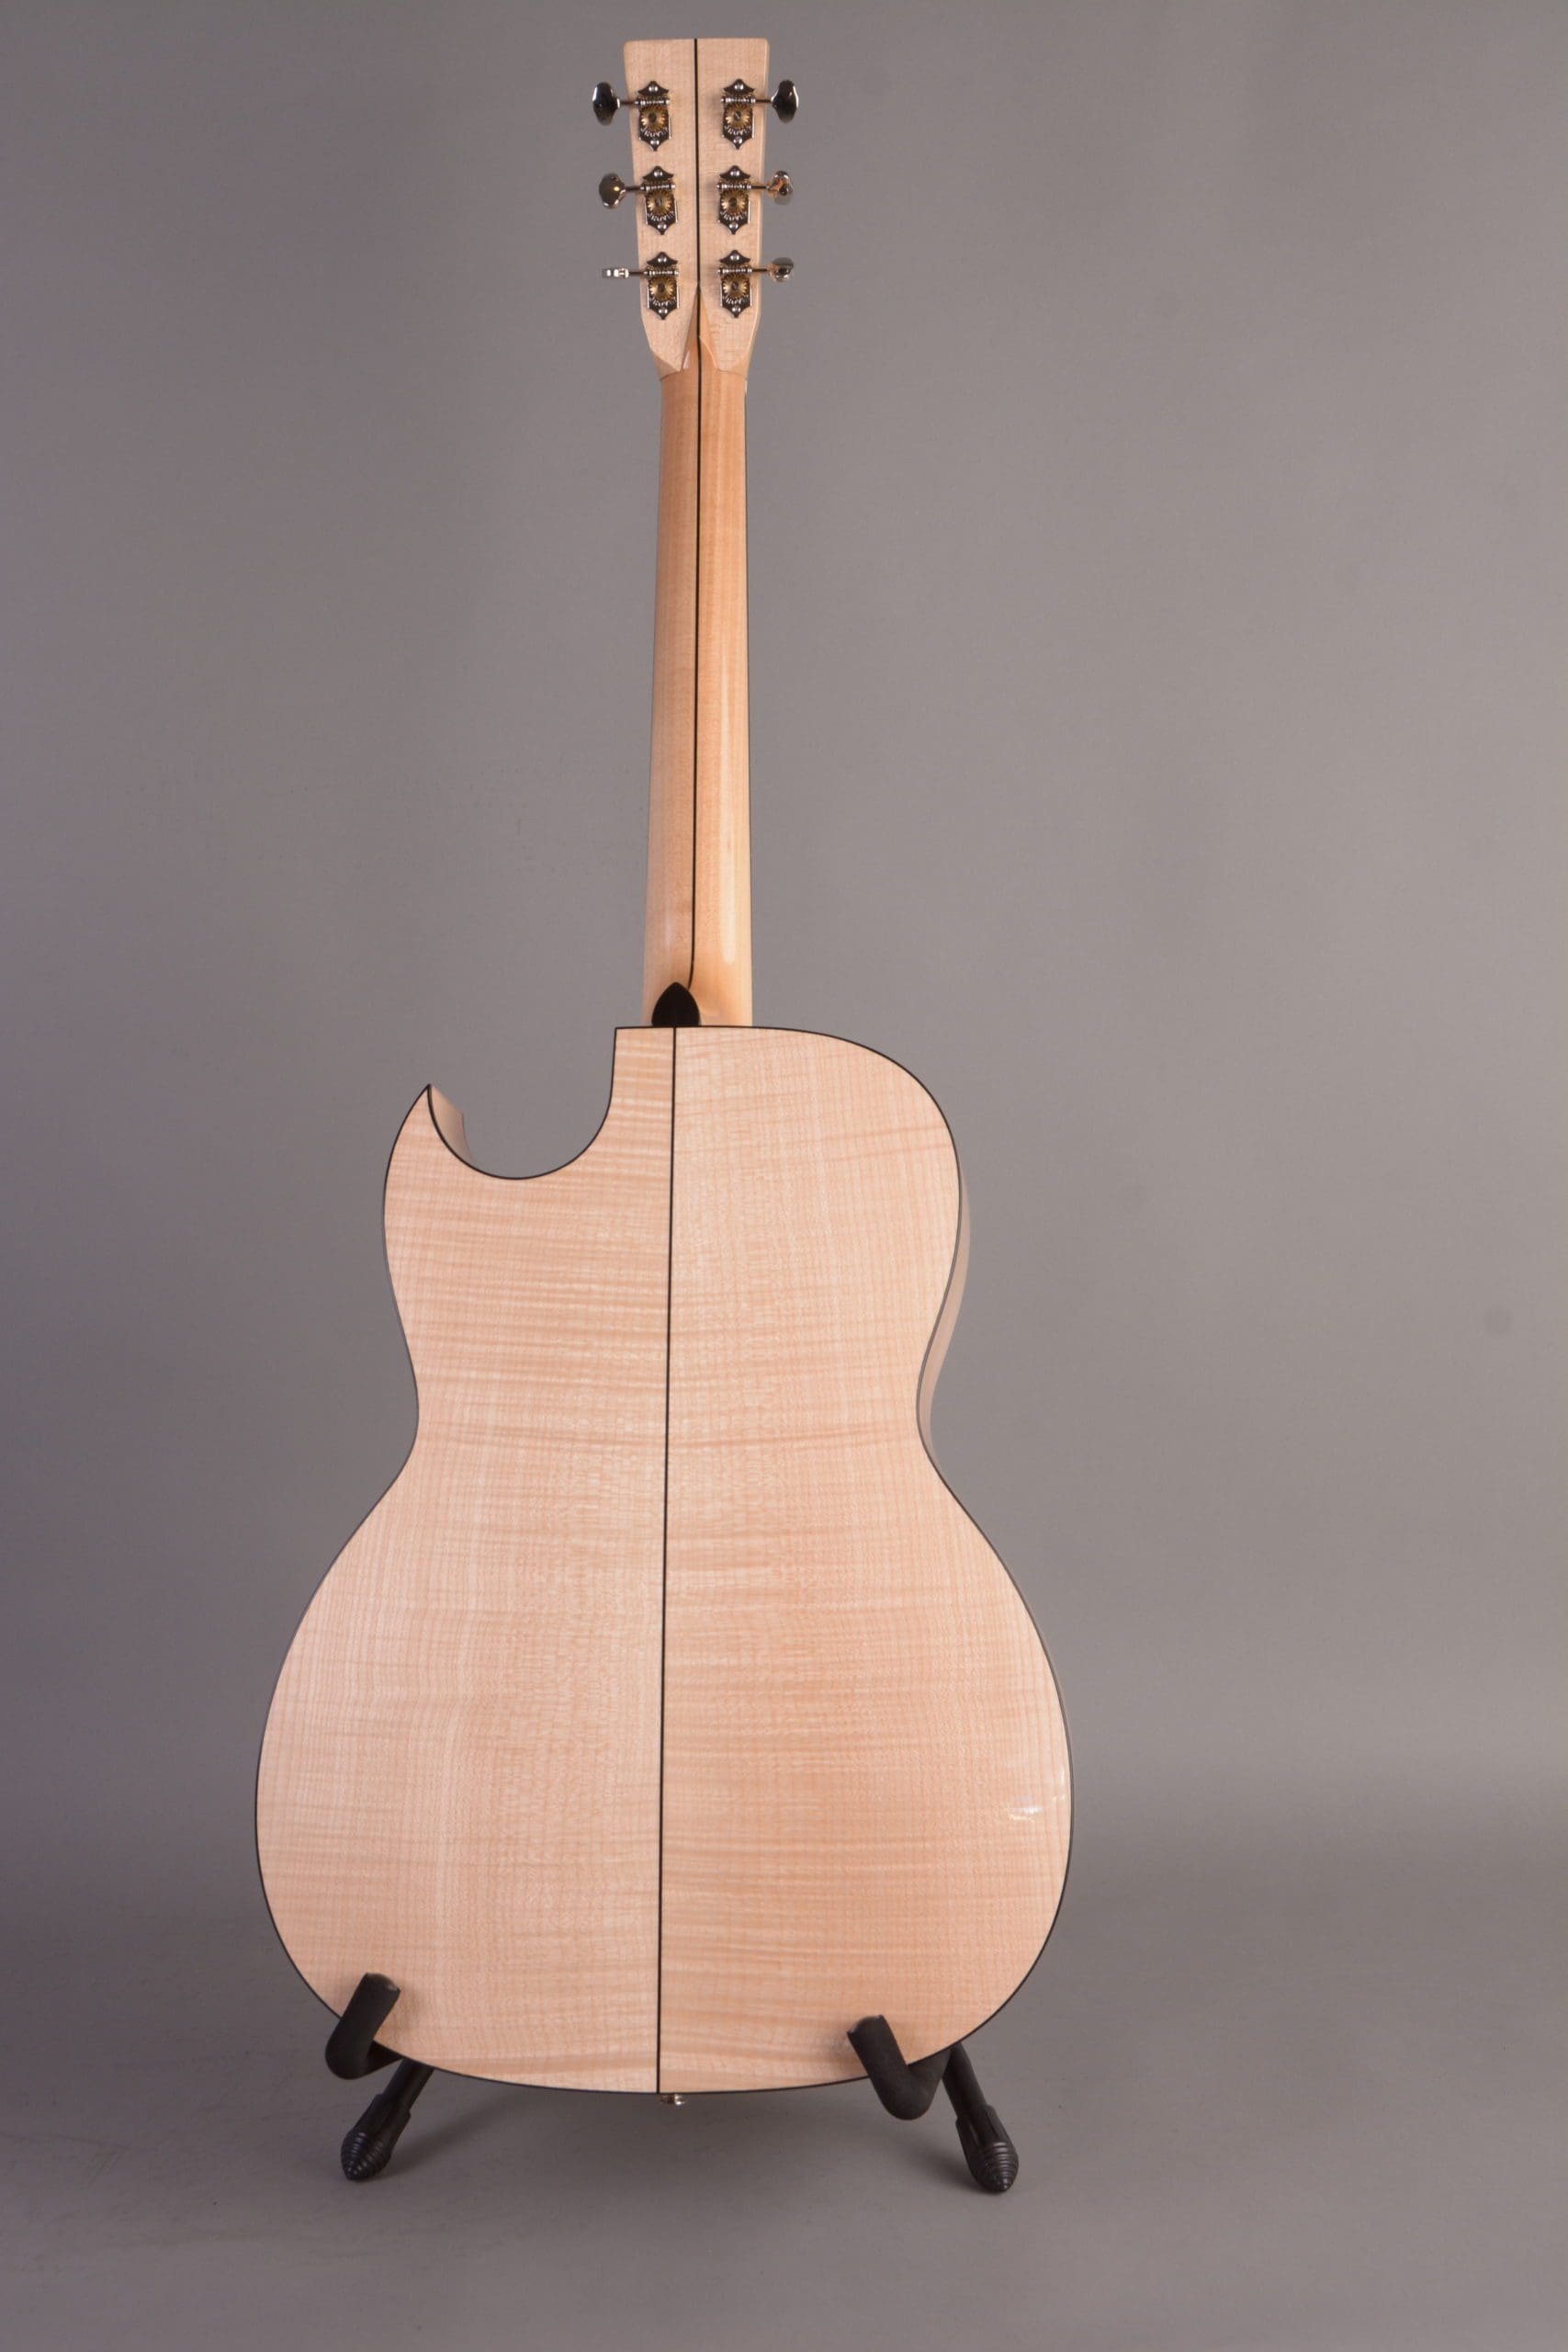 rear view of custom guitar created by lead engineer at NOVO engineering